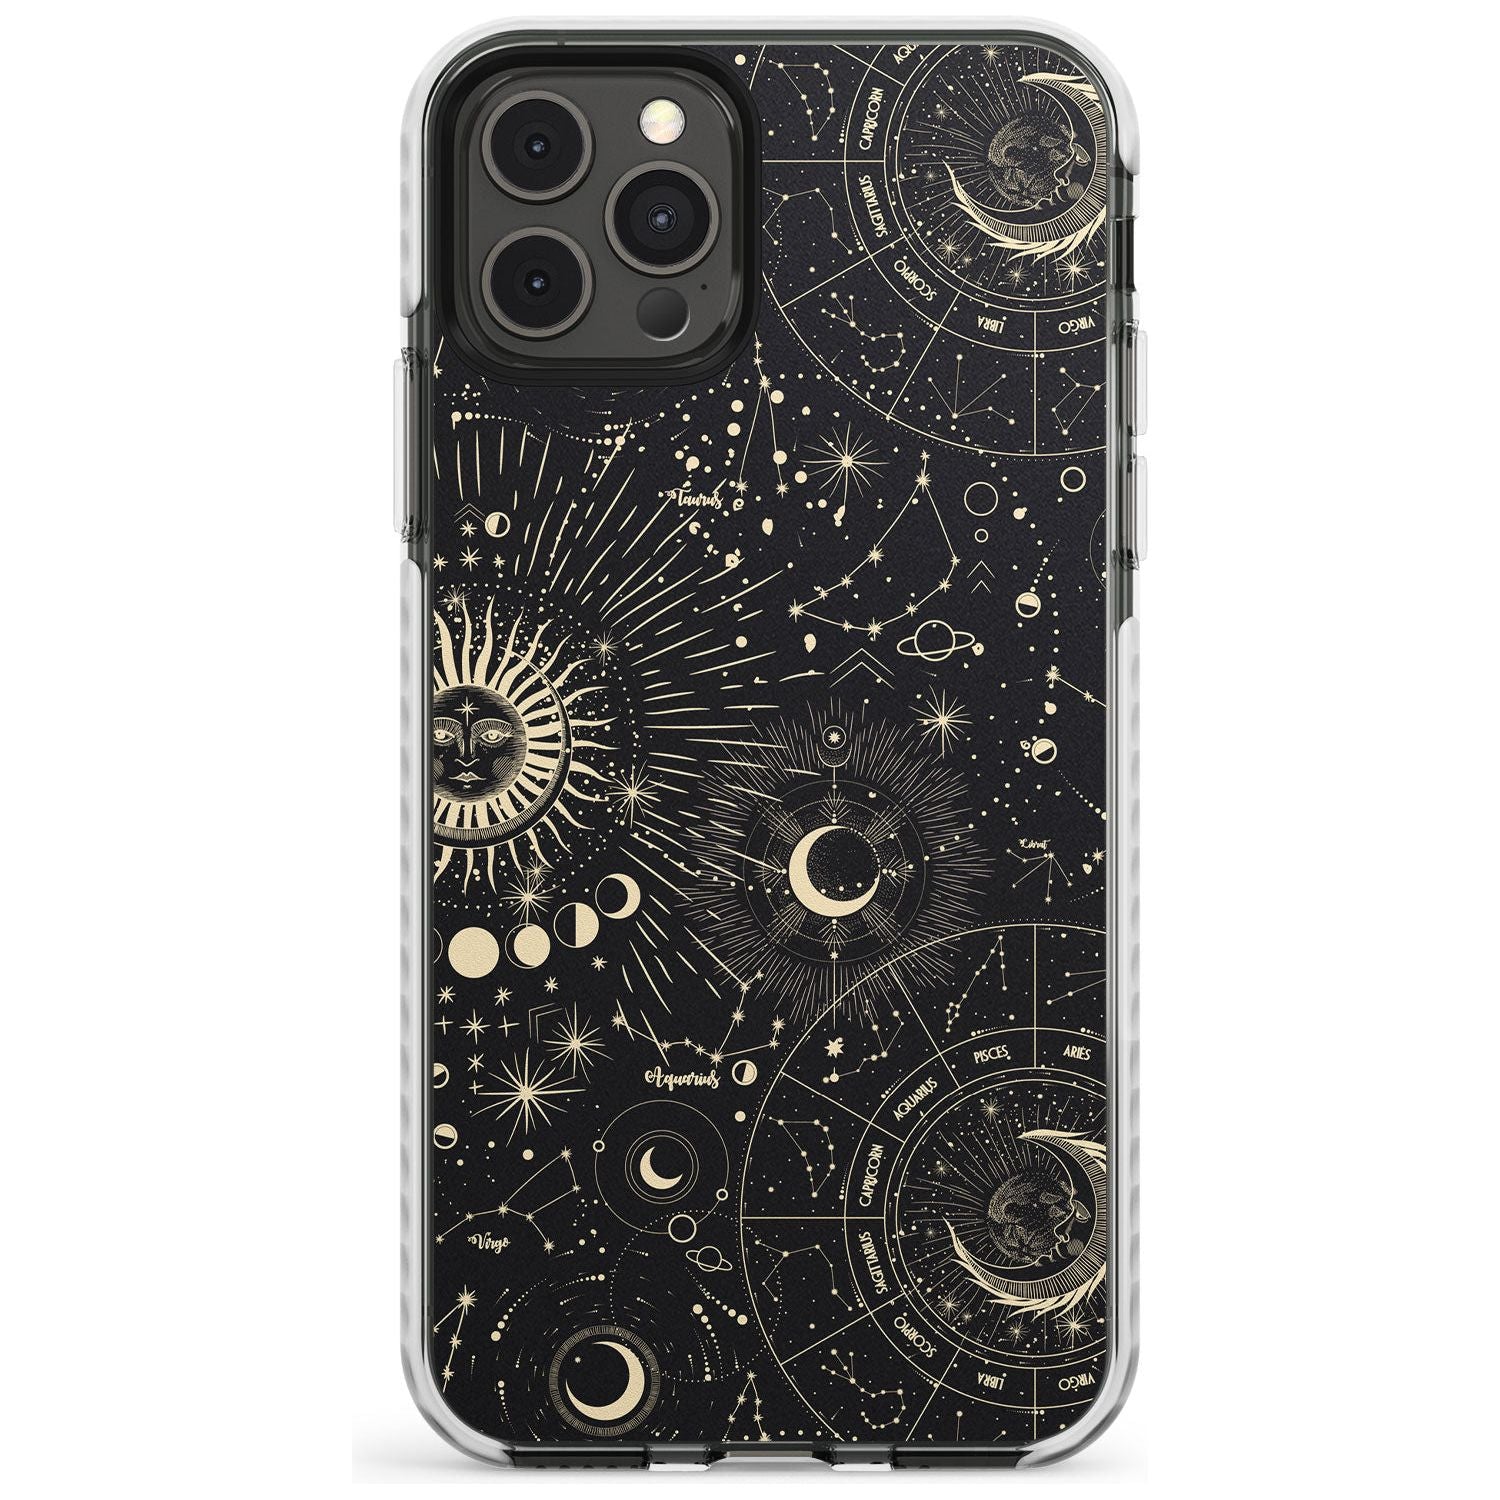 Suns & Zodiac Charts Slim TPU Phone Case for iPhone 11 Pro Max